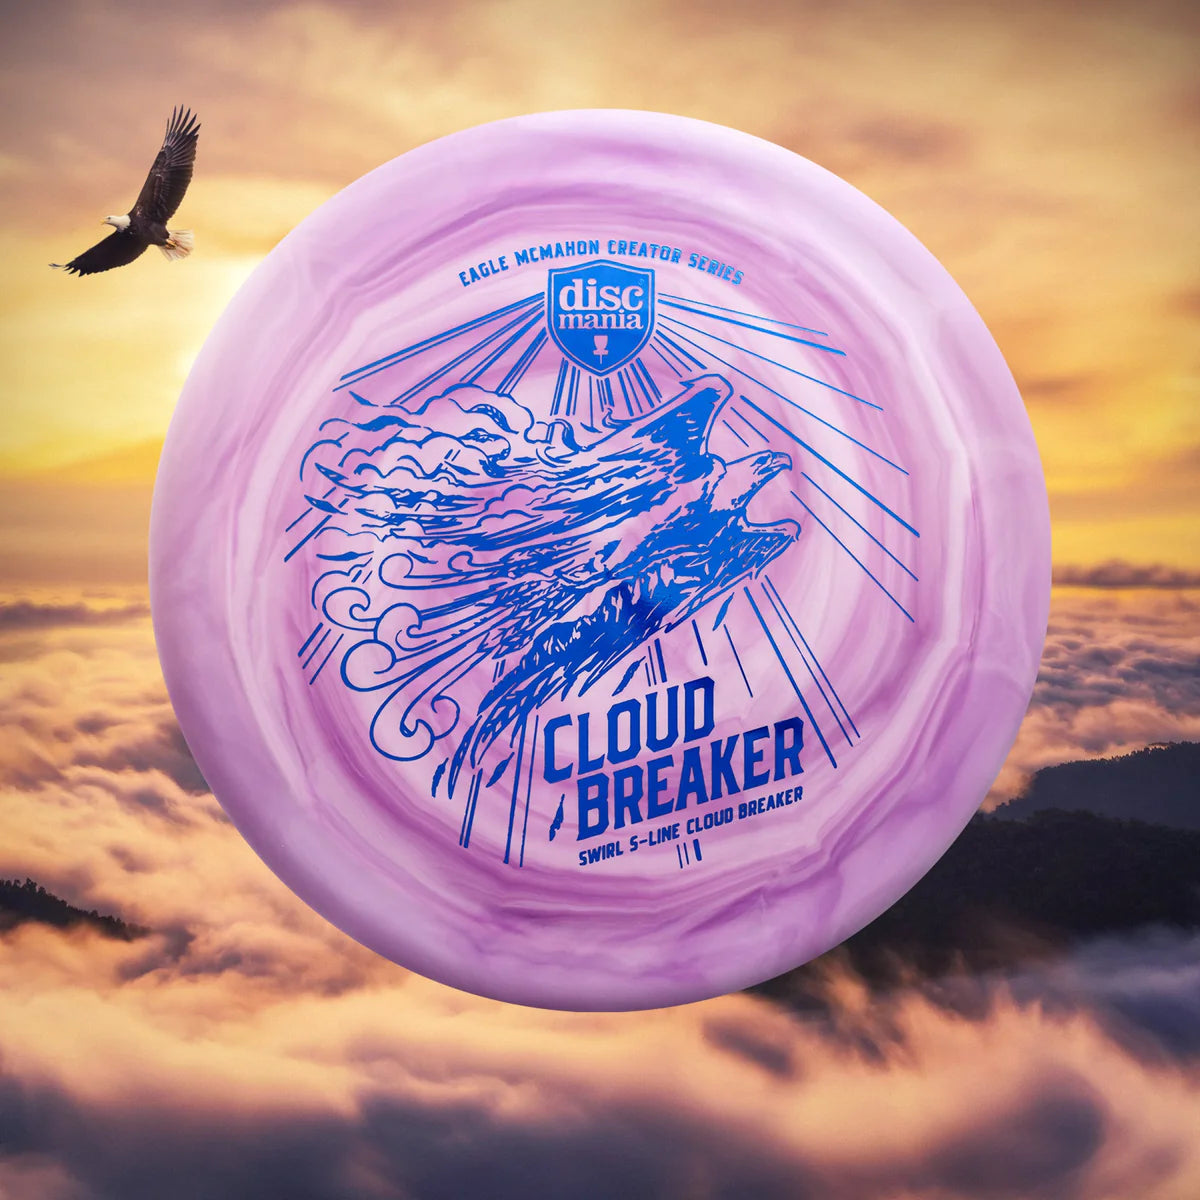 Swirl S-line Cloud Breaker - Eagle McMahon Creator Series